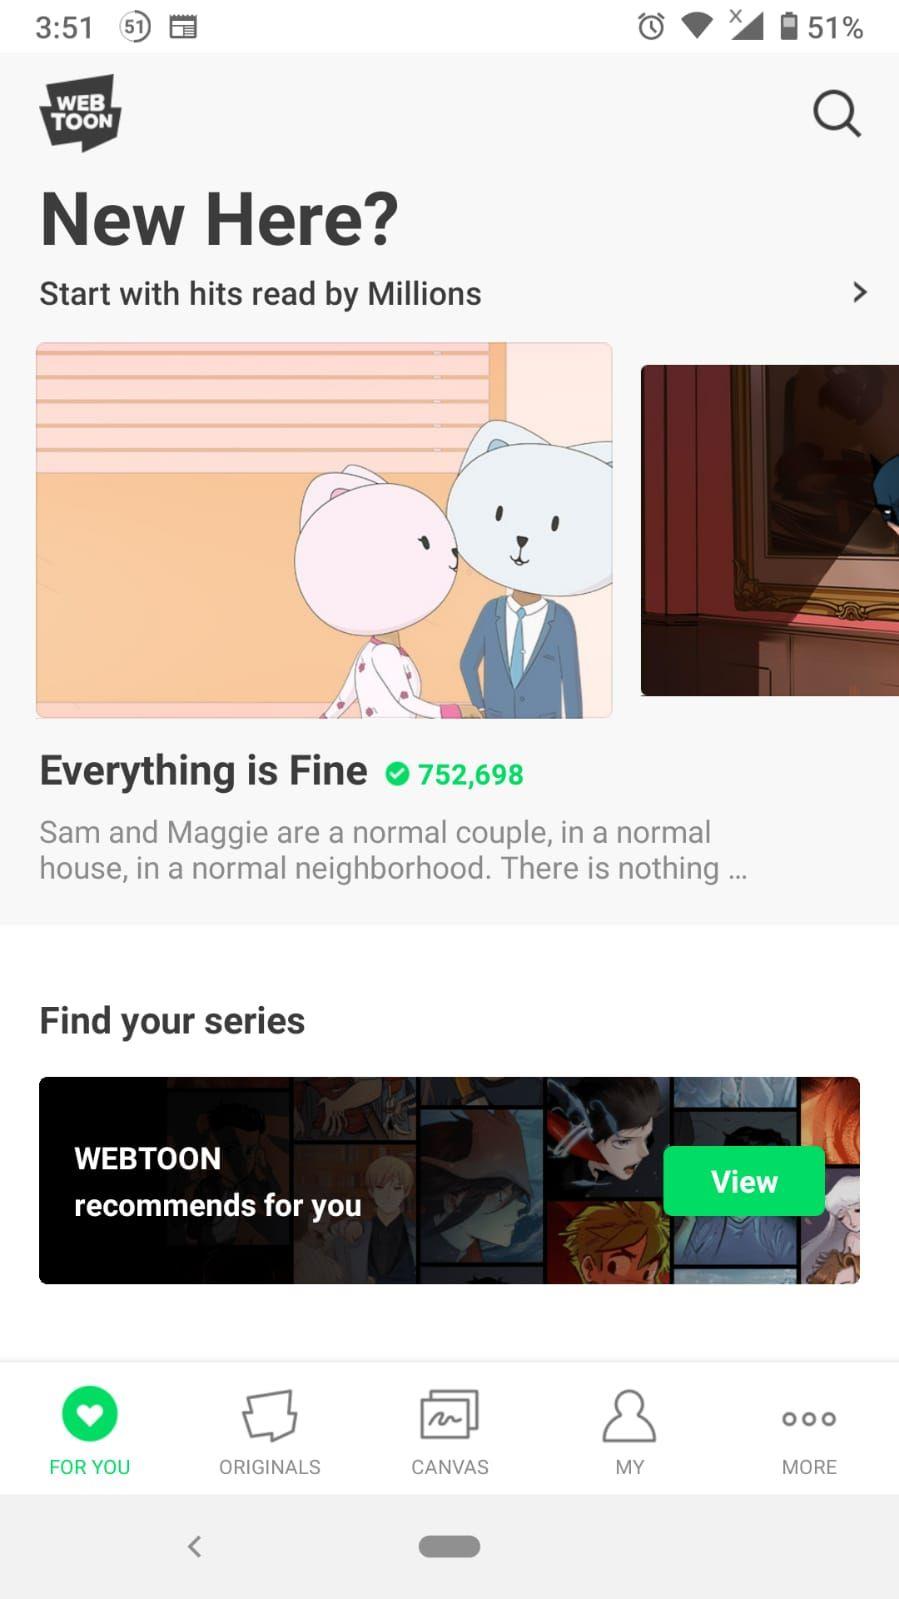 5 najlepszych aplikacji Manhwa i Webtoons na Androida i iPhone'a